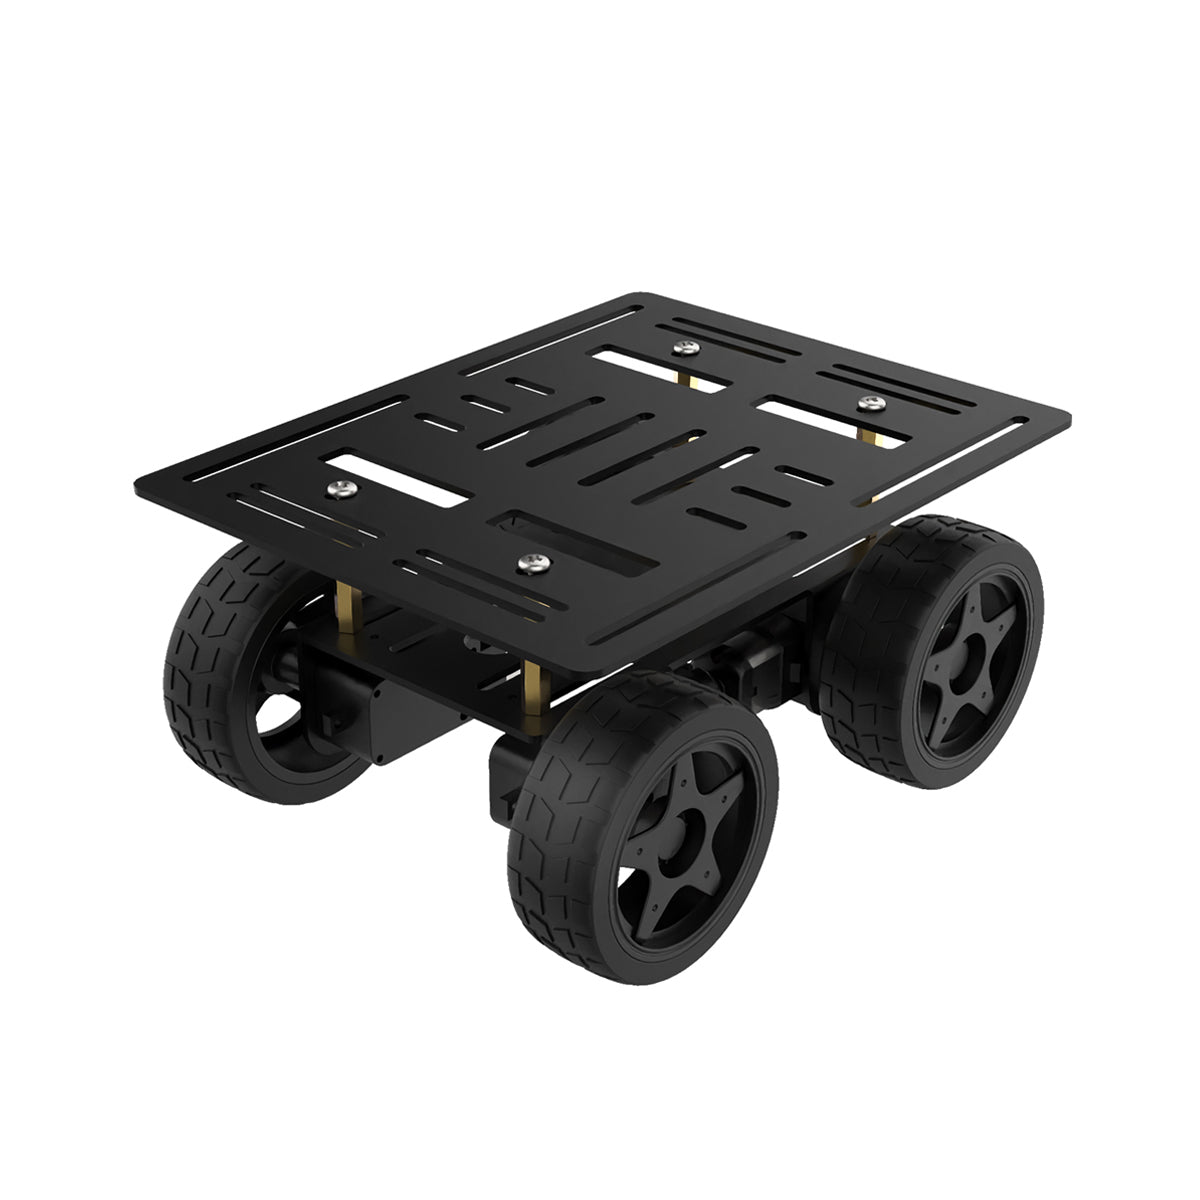 Hiwonder 4WD Chassis Car Kit with Aluminum Alloy Frame, TT Motor Smart Robot Car Kit